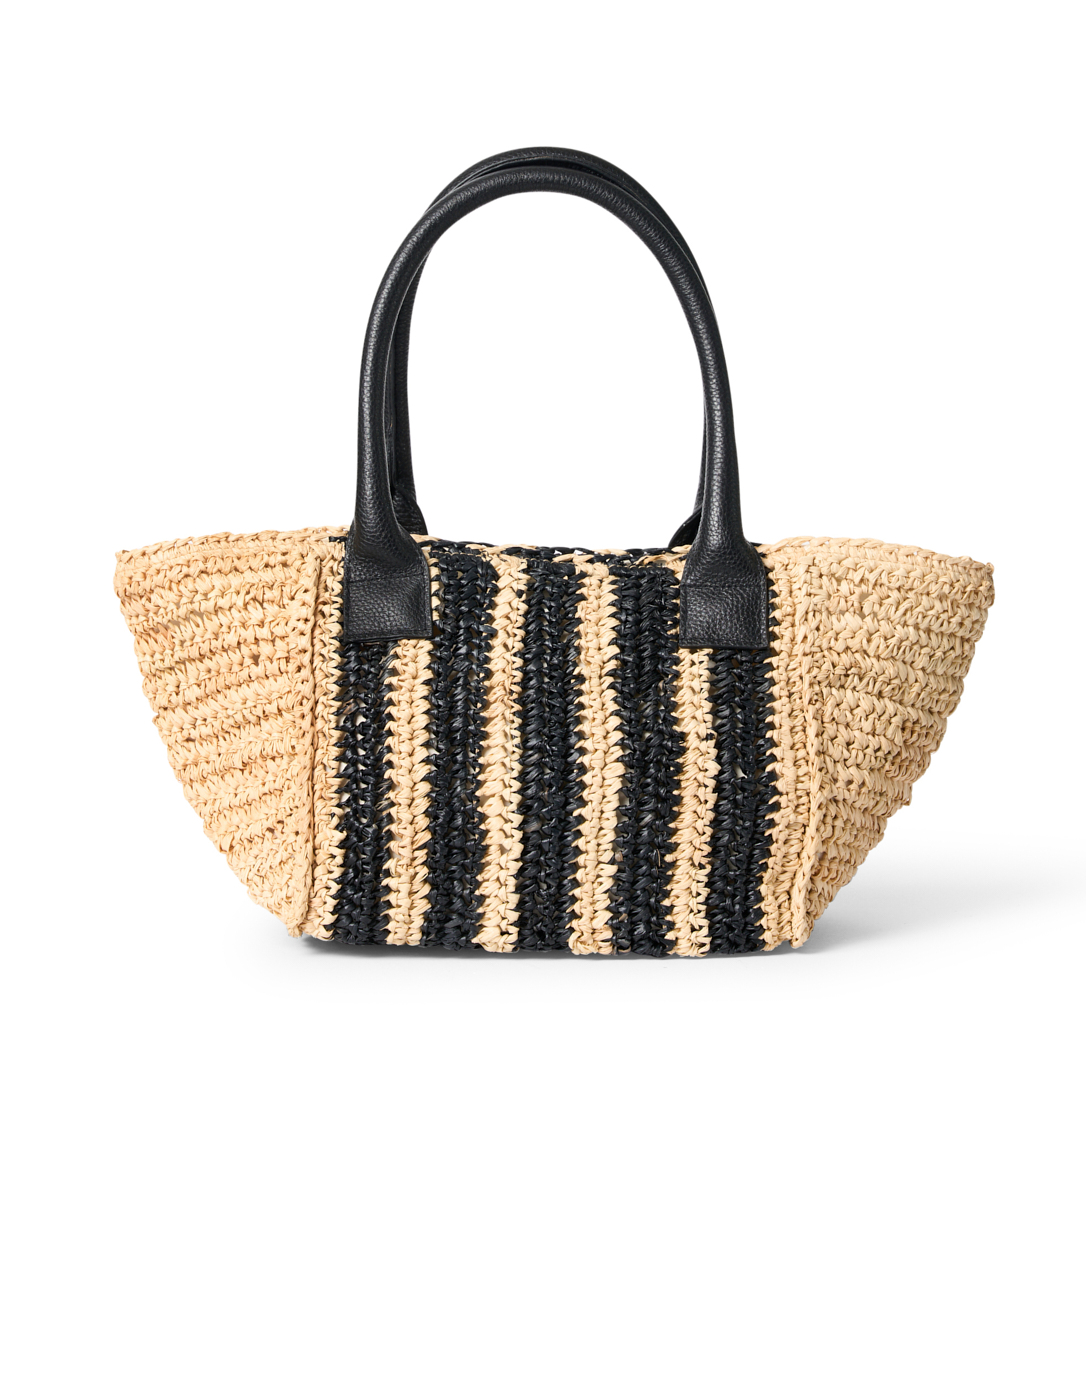 Marina Sand Beige and Black Striped Straw Bag